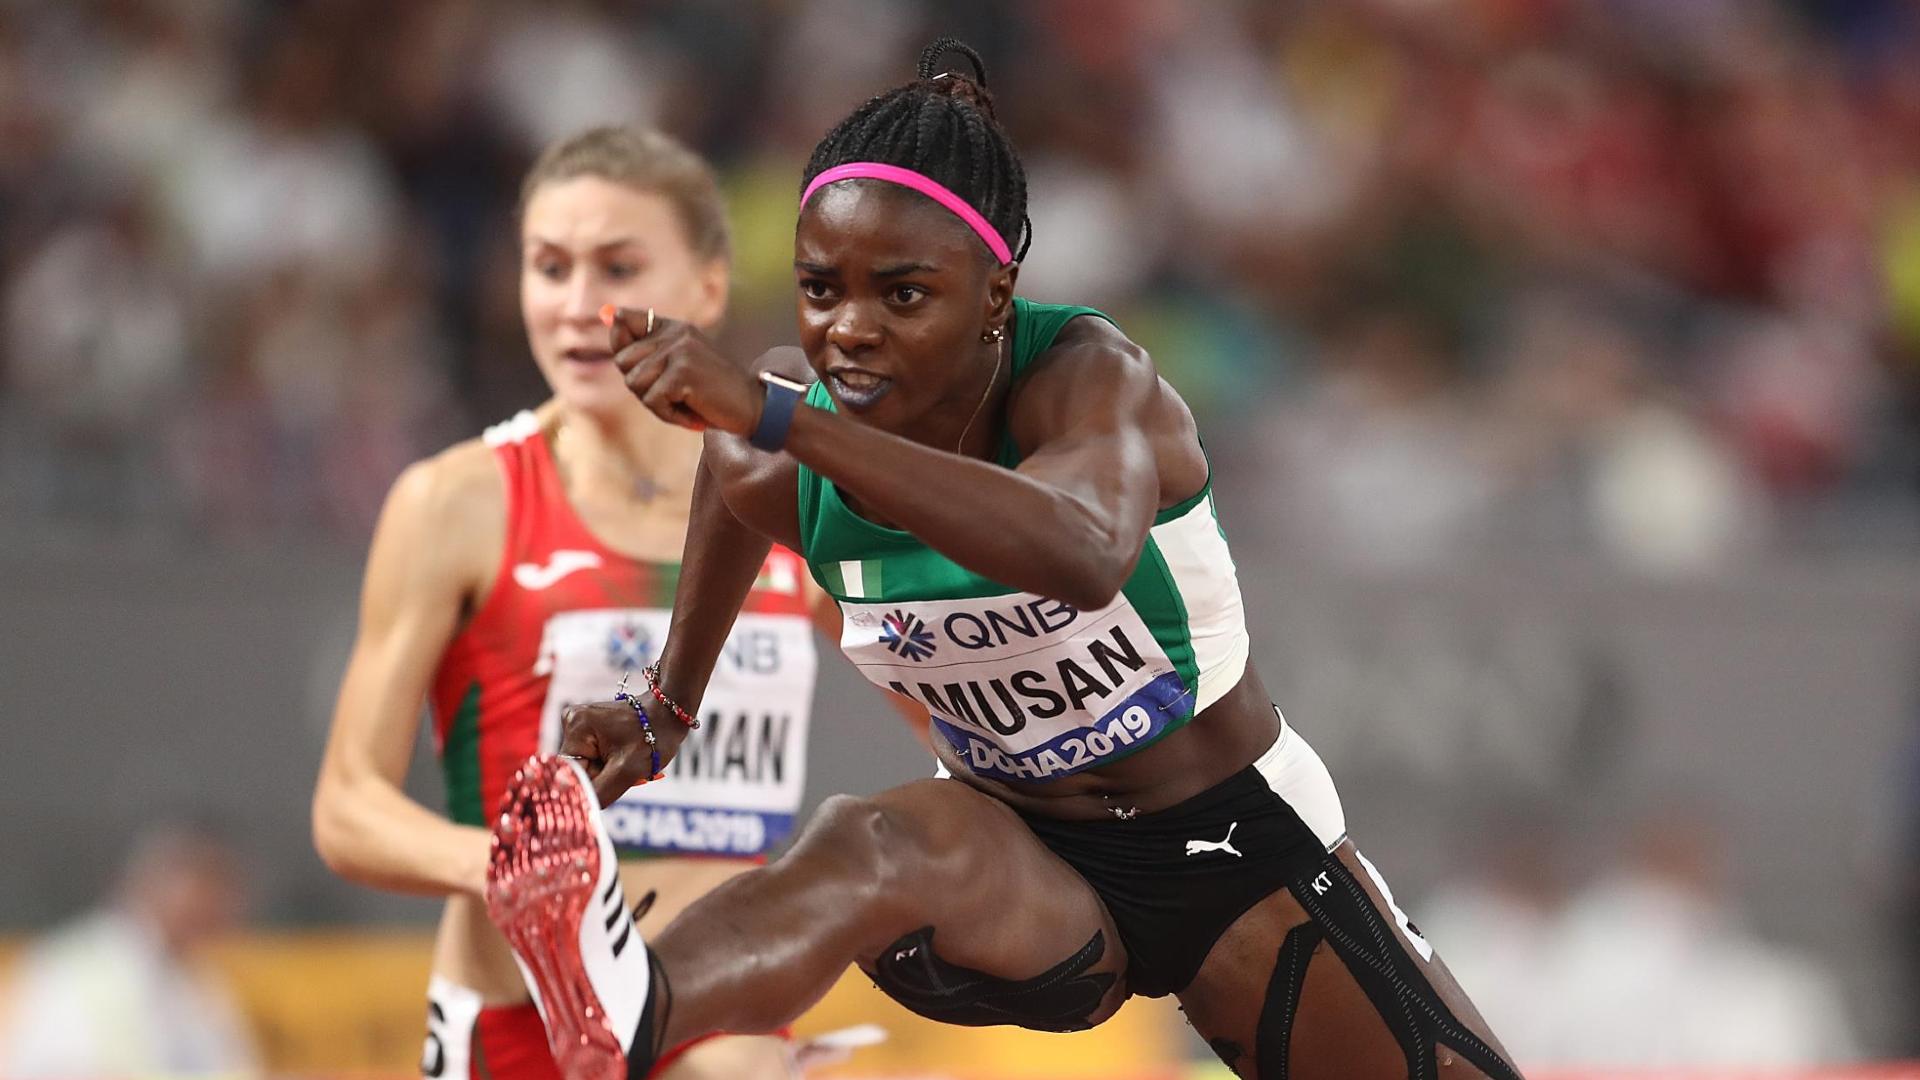 Tobi Amusan in action during Doha World Championships 2019 (Image Credits - World Athletics)